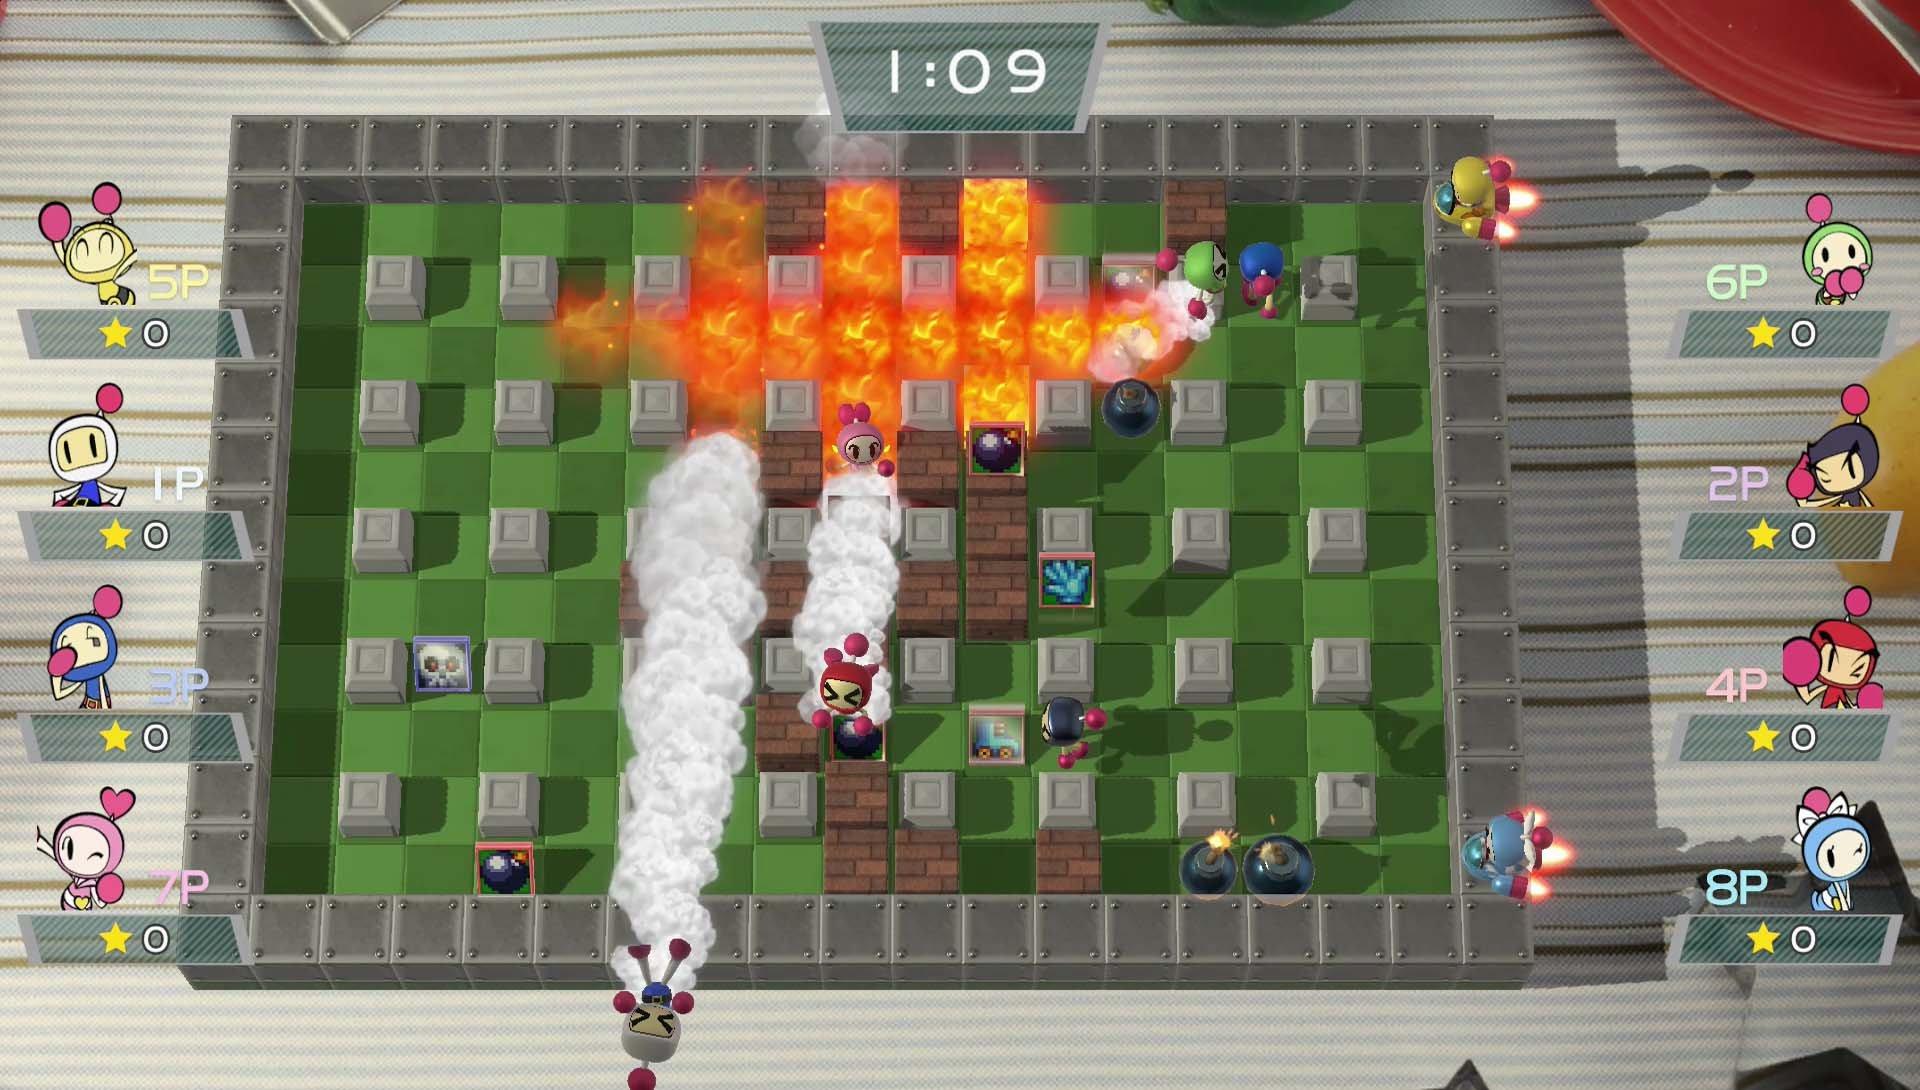 Super Bomberman R Online is the series' bizarre yet fun take on